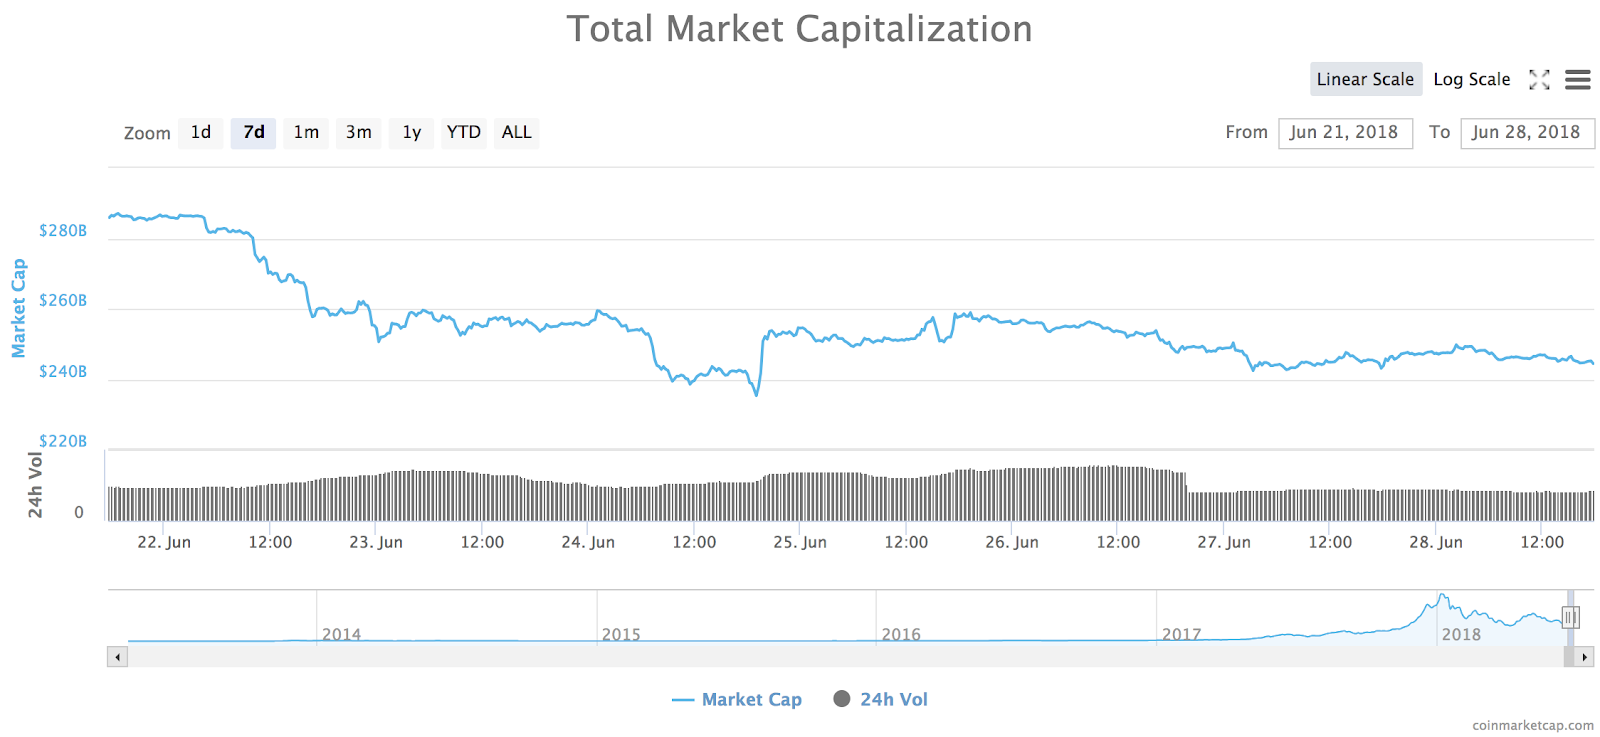 Total market cap of all cryptocurrencies